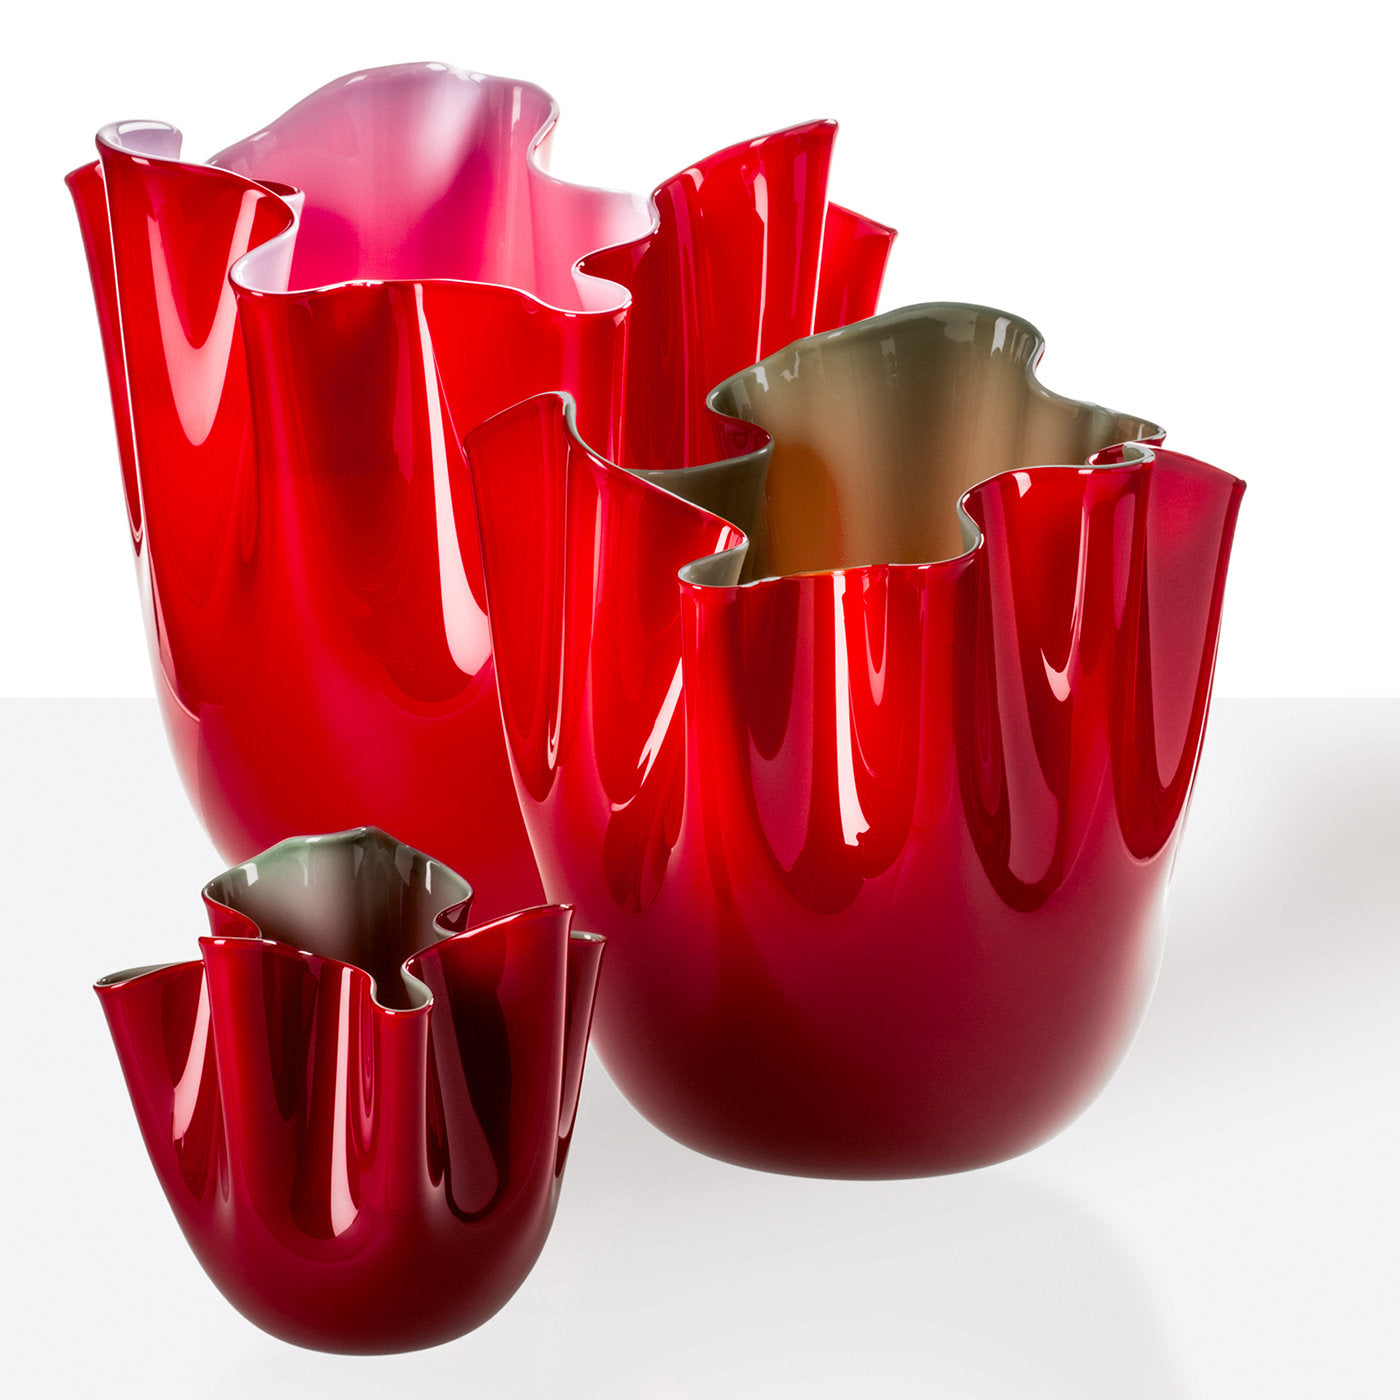 Fazzoletto Opalini Rote Vase von Fulvio Bianconi # 1 - Alternative Ansicht 1